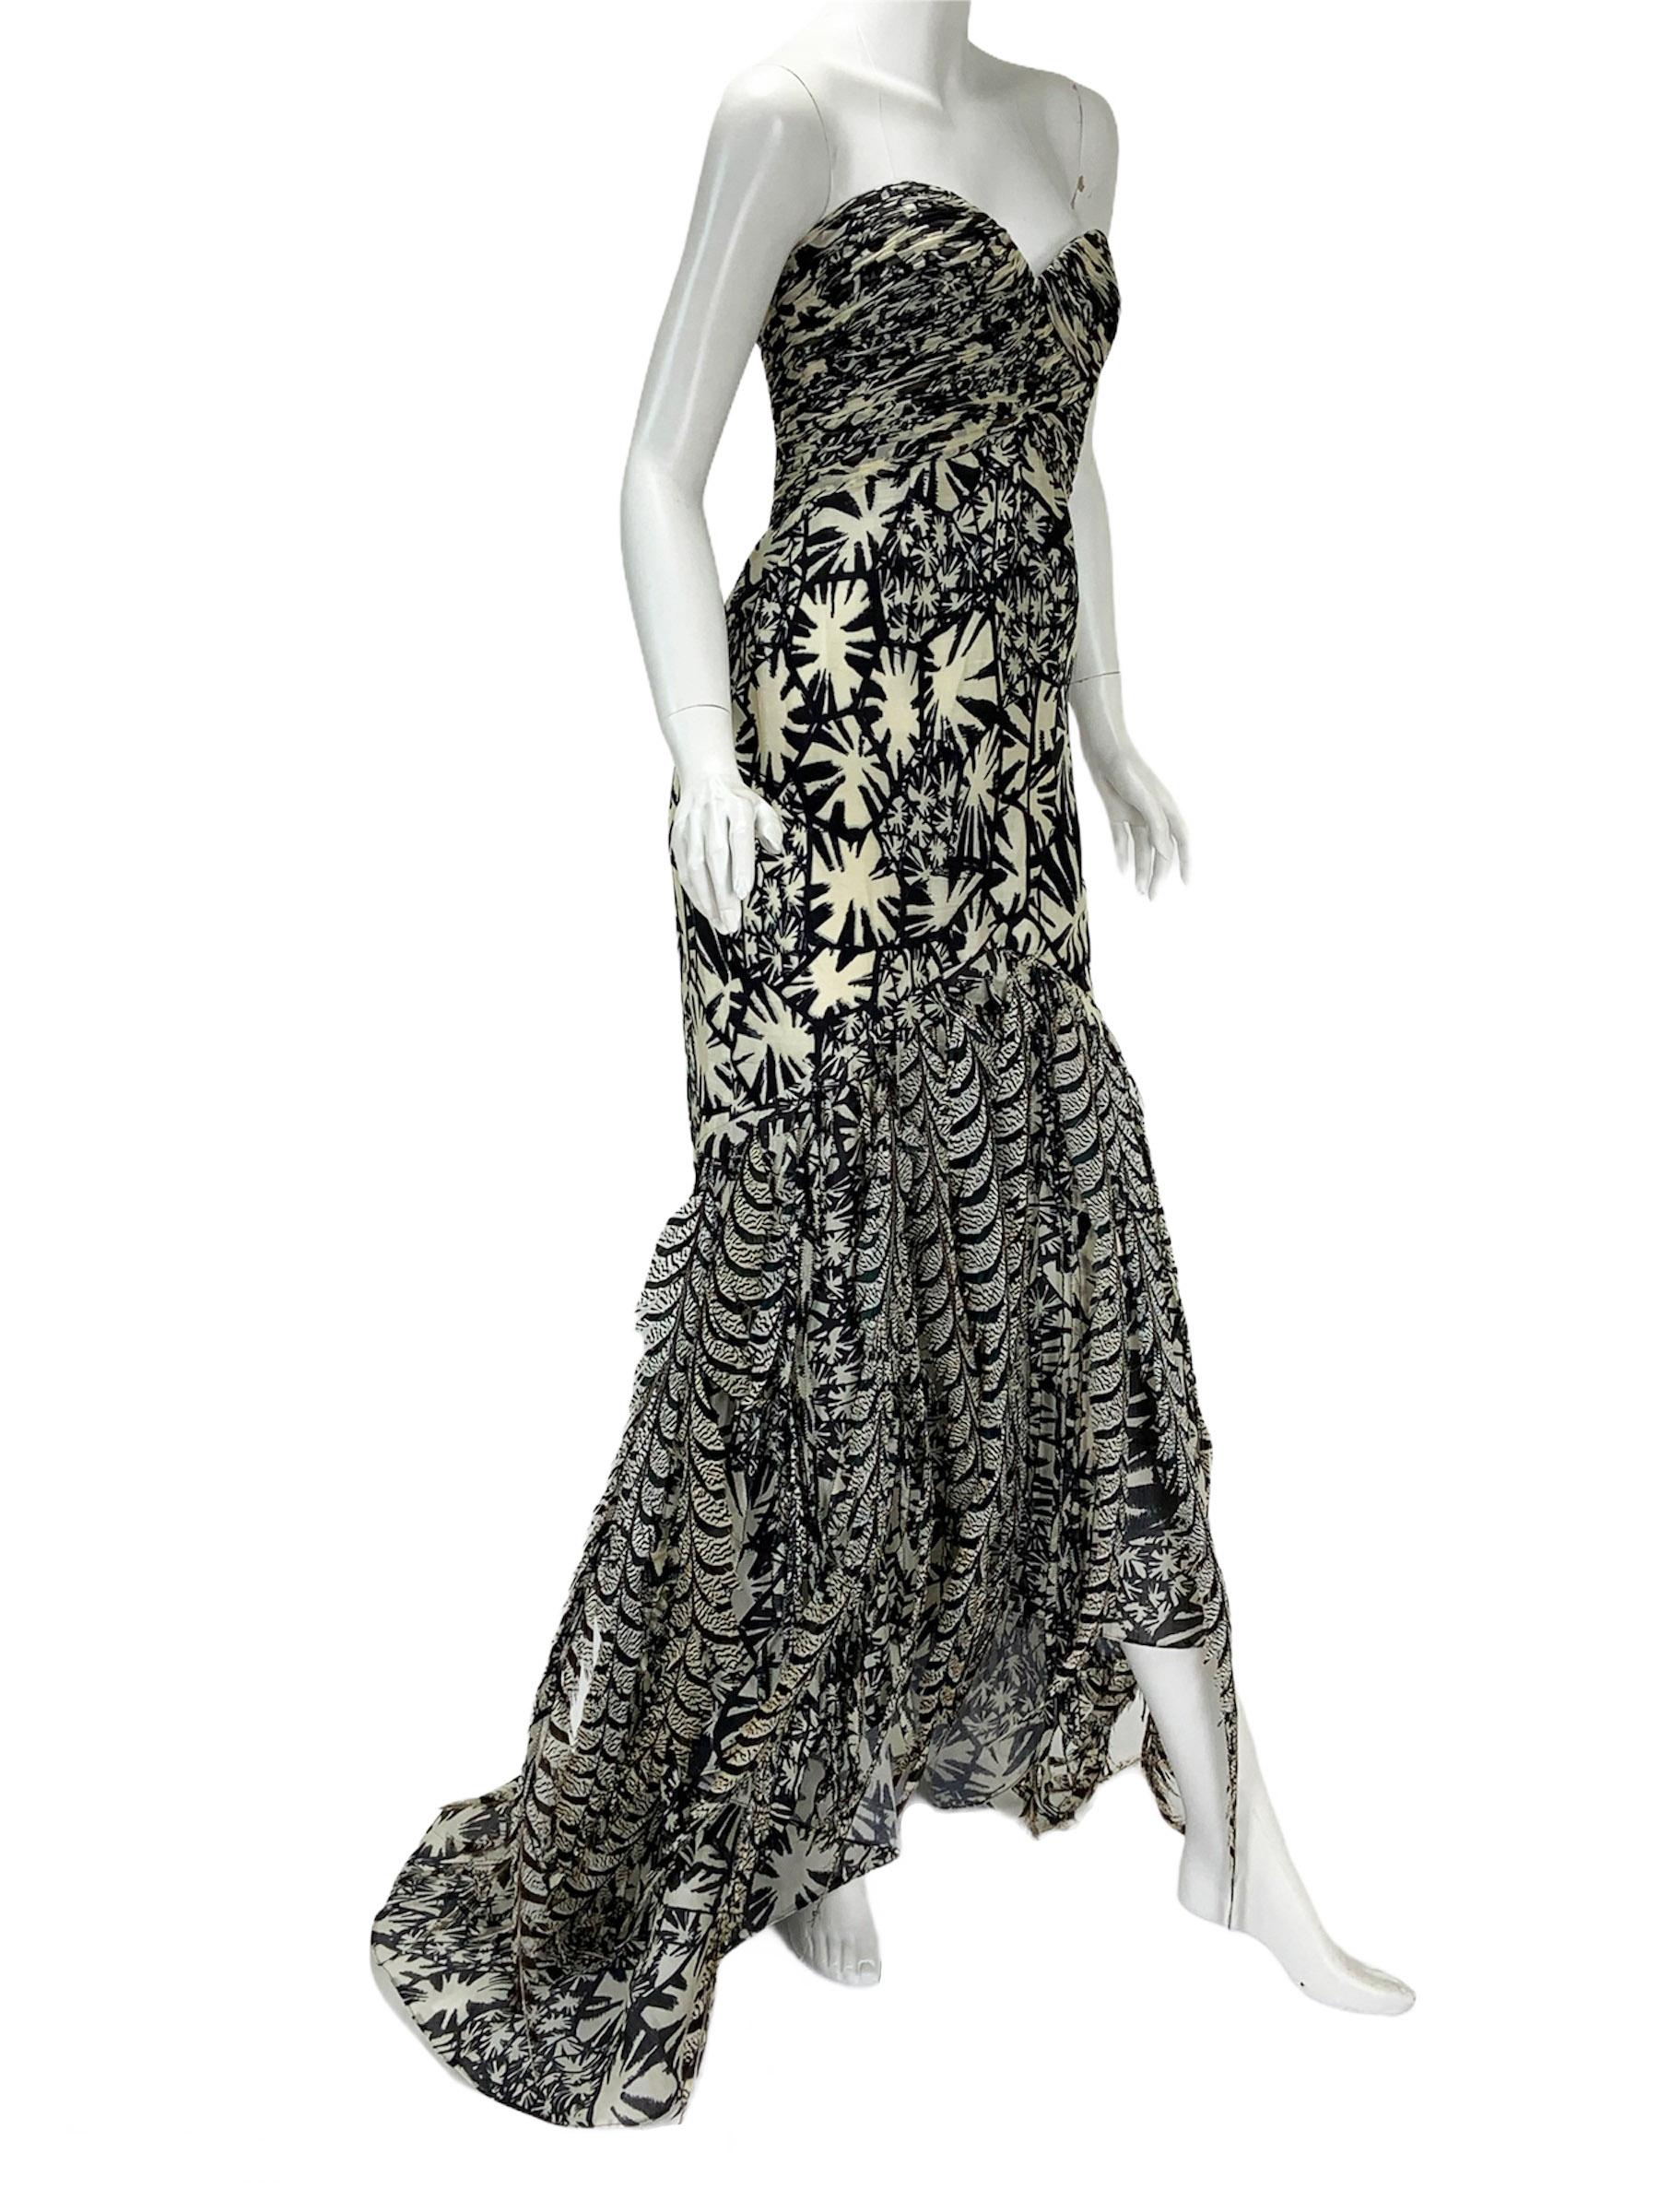 Black New Oscar de la Renta S/S 2008 AD Campaign Silk Pheasant Feather Dress Gown US 8